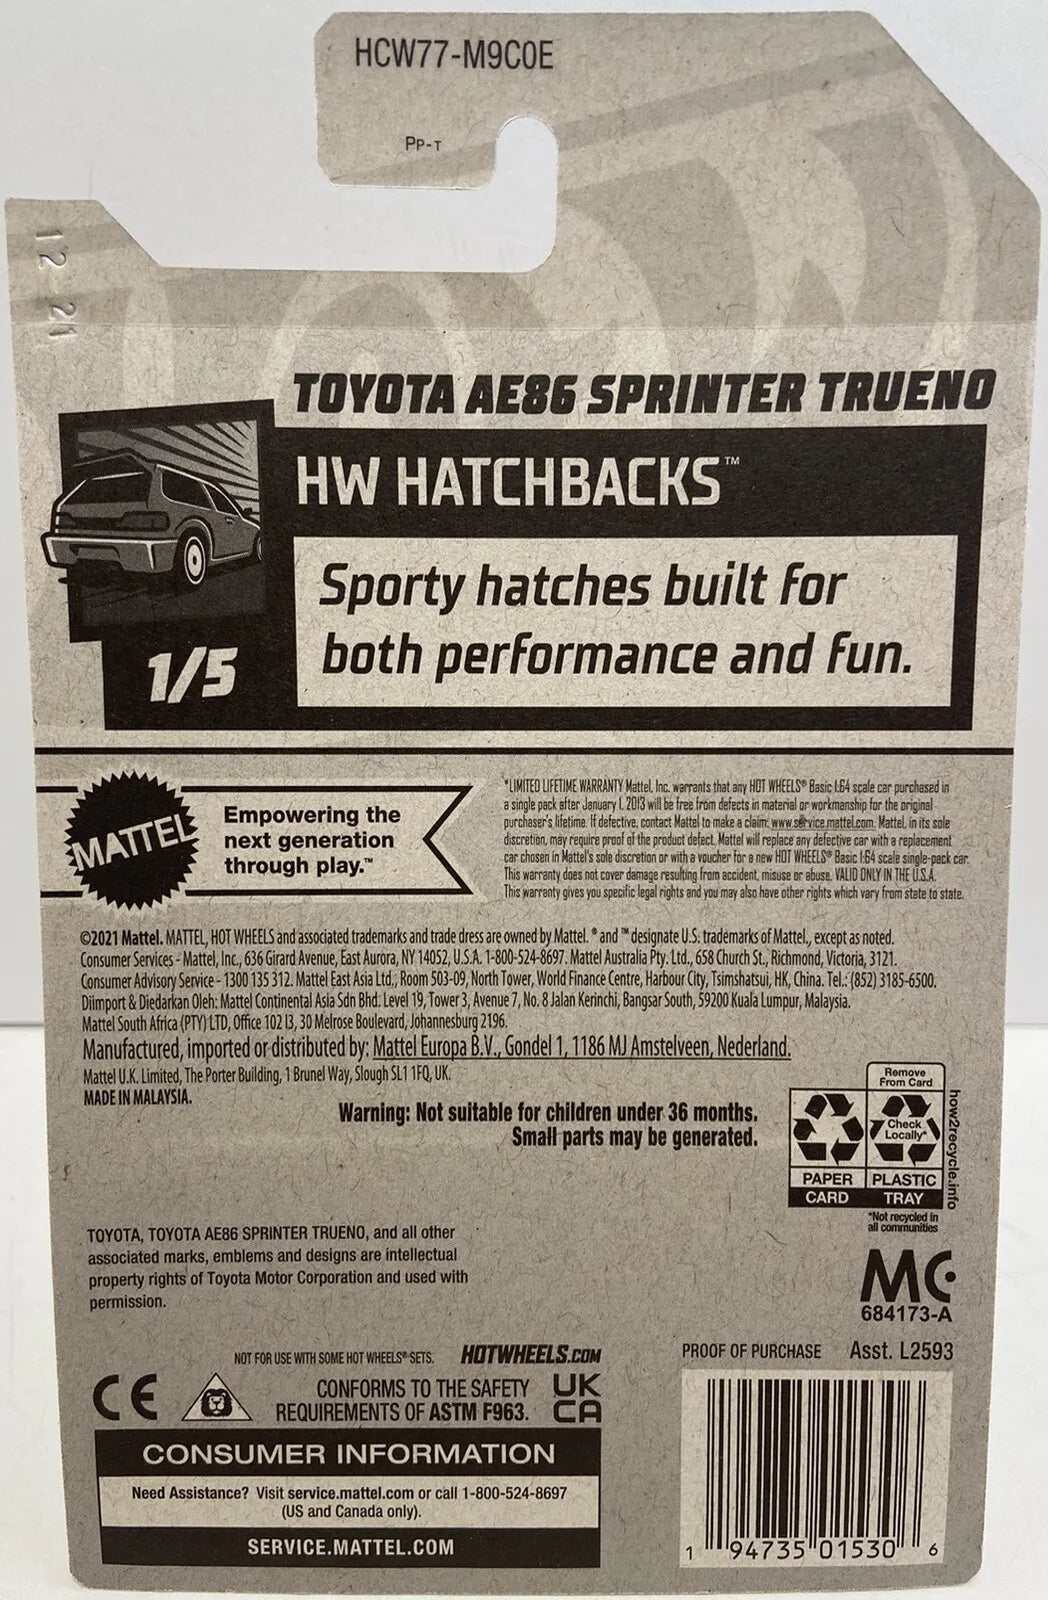 Hot Wheels Toyota AE86 Sprinter Trueno HW Hatchbacks HCW77